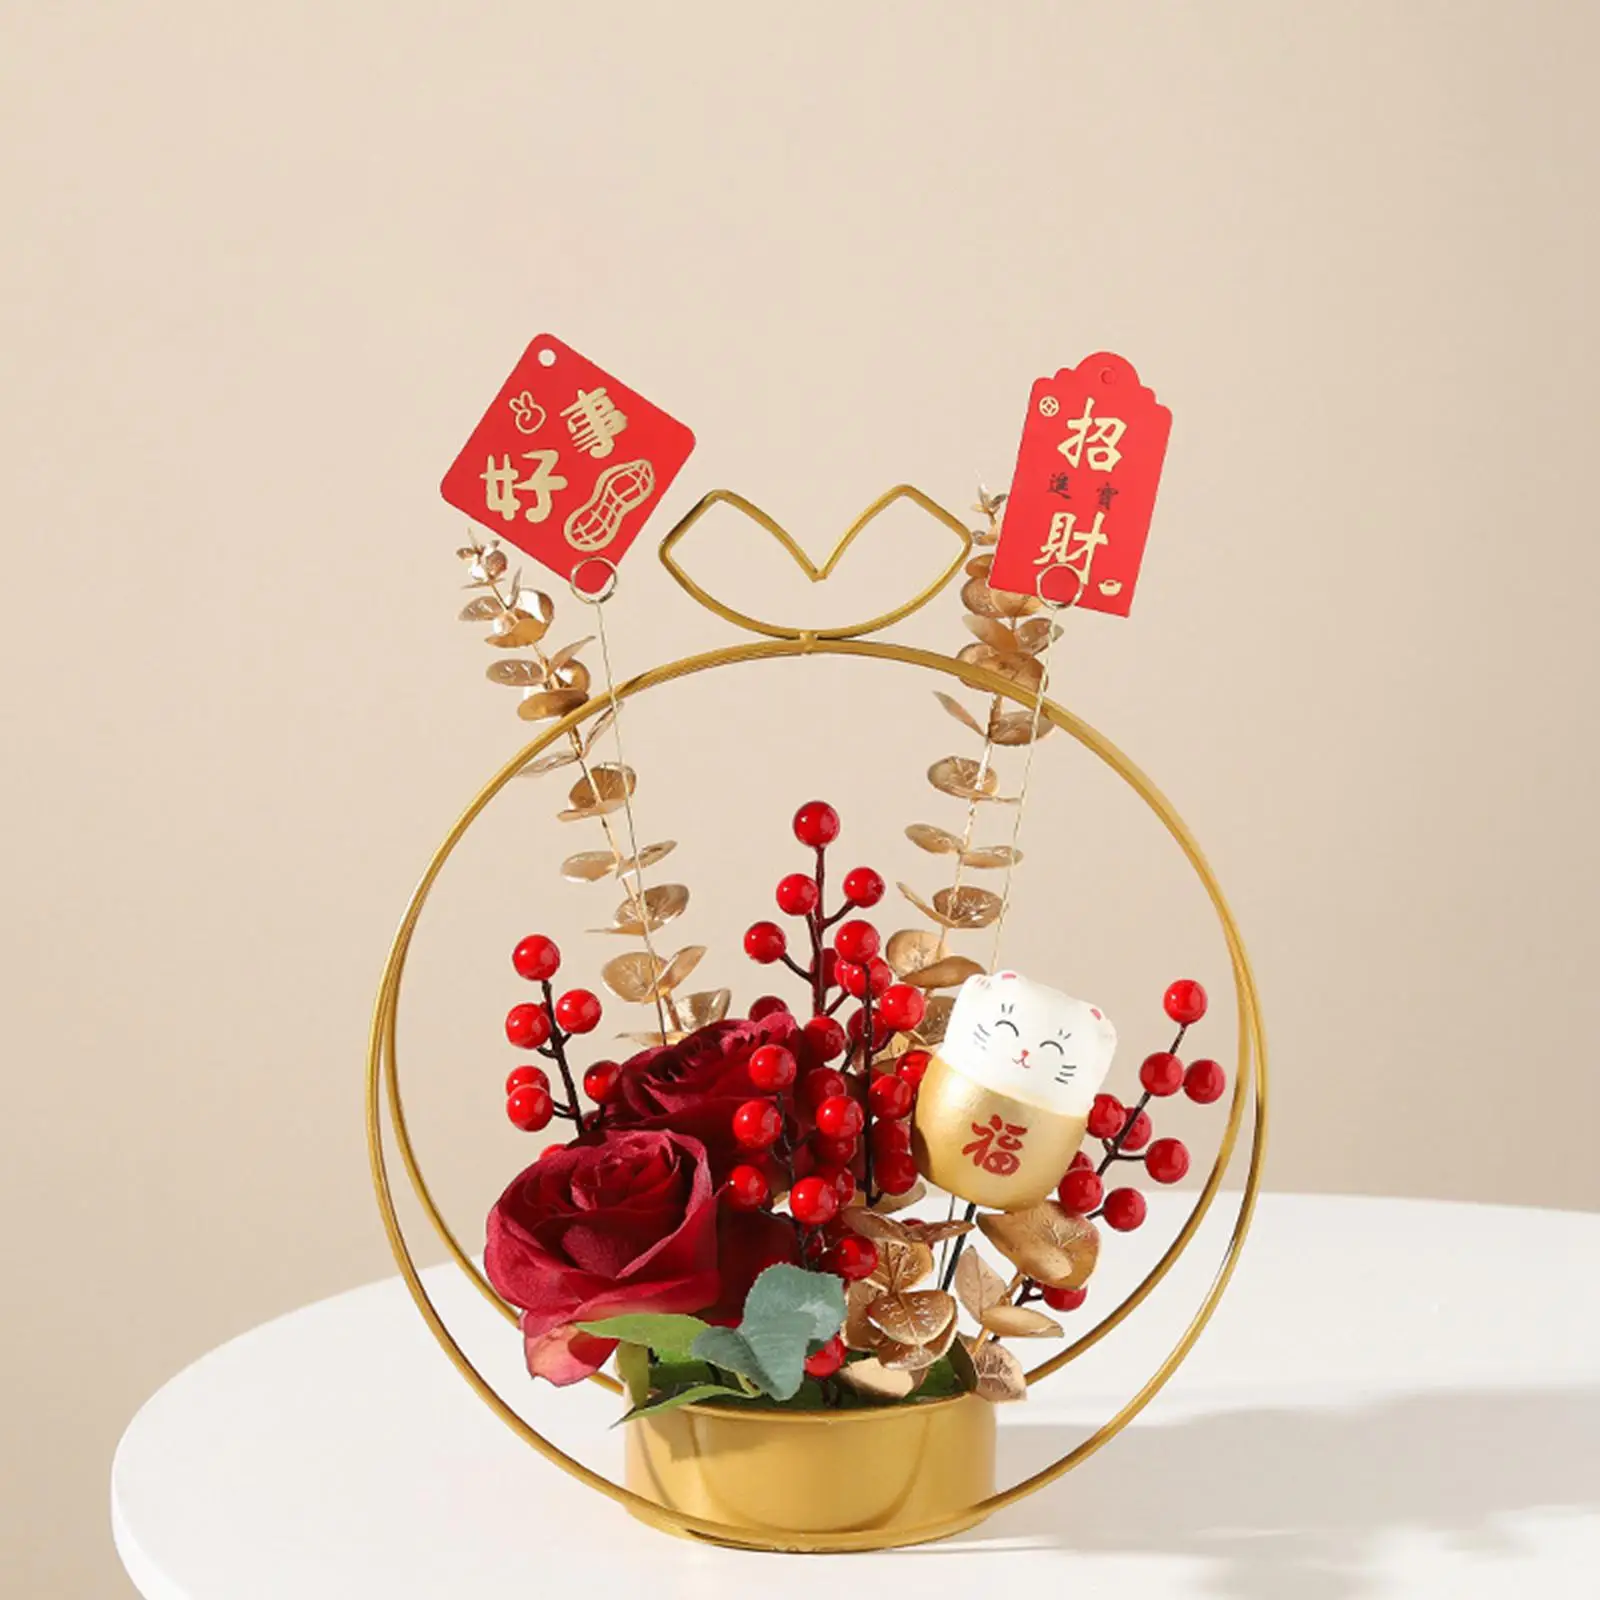 Flower Basket Ornament Decor Table Centerpiece Harvest Fall for Thanksgiving